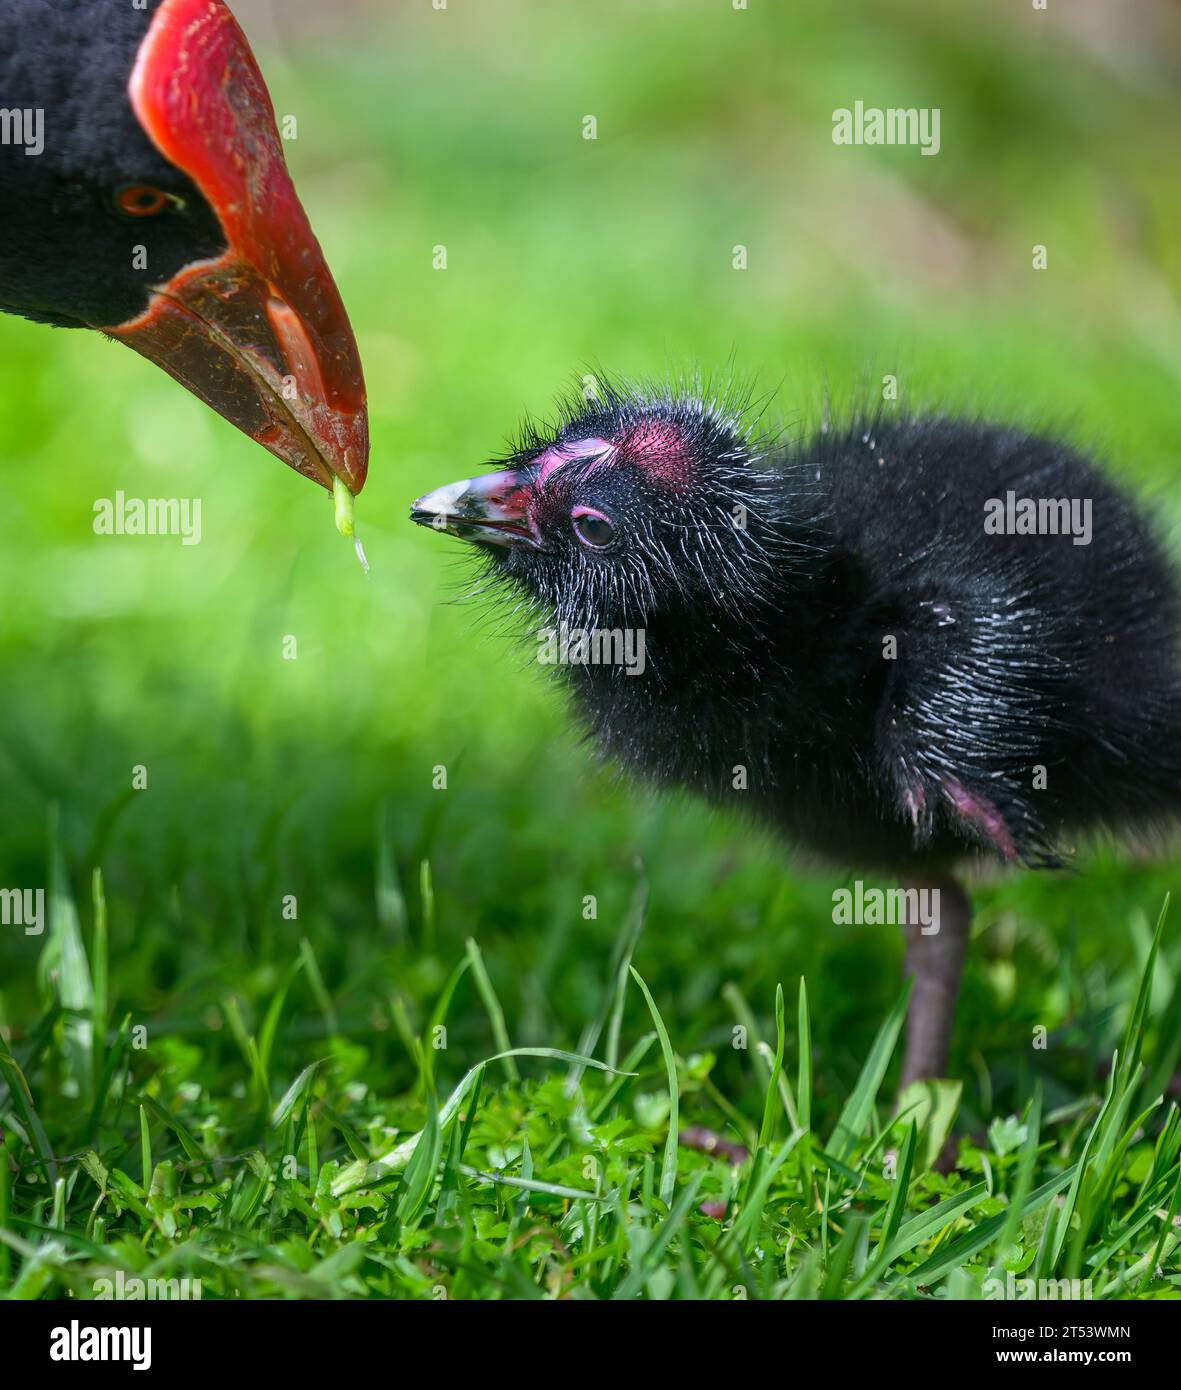 Pukeko bird mother feeding baby Pukeko. Western Springs park, Auckland. Vertical format. Stock Photo